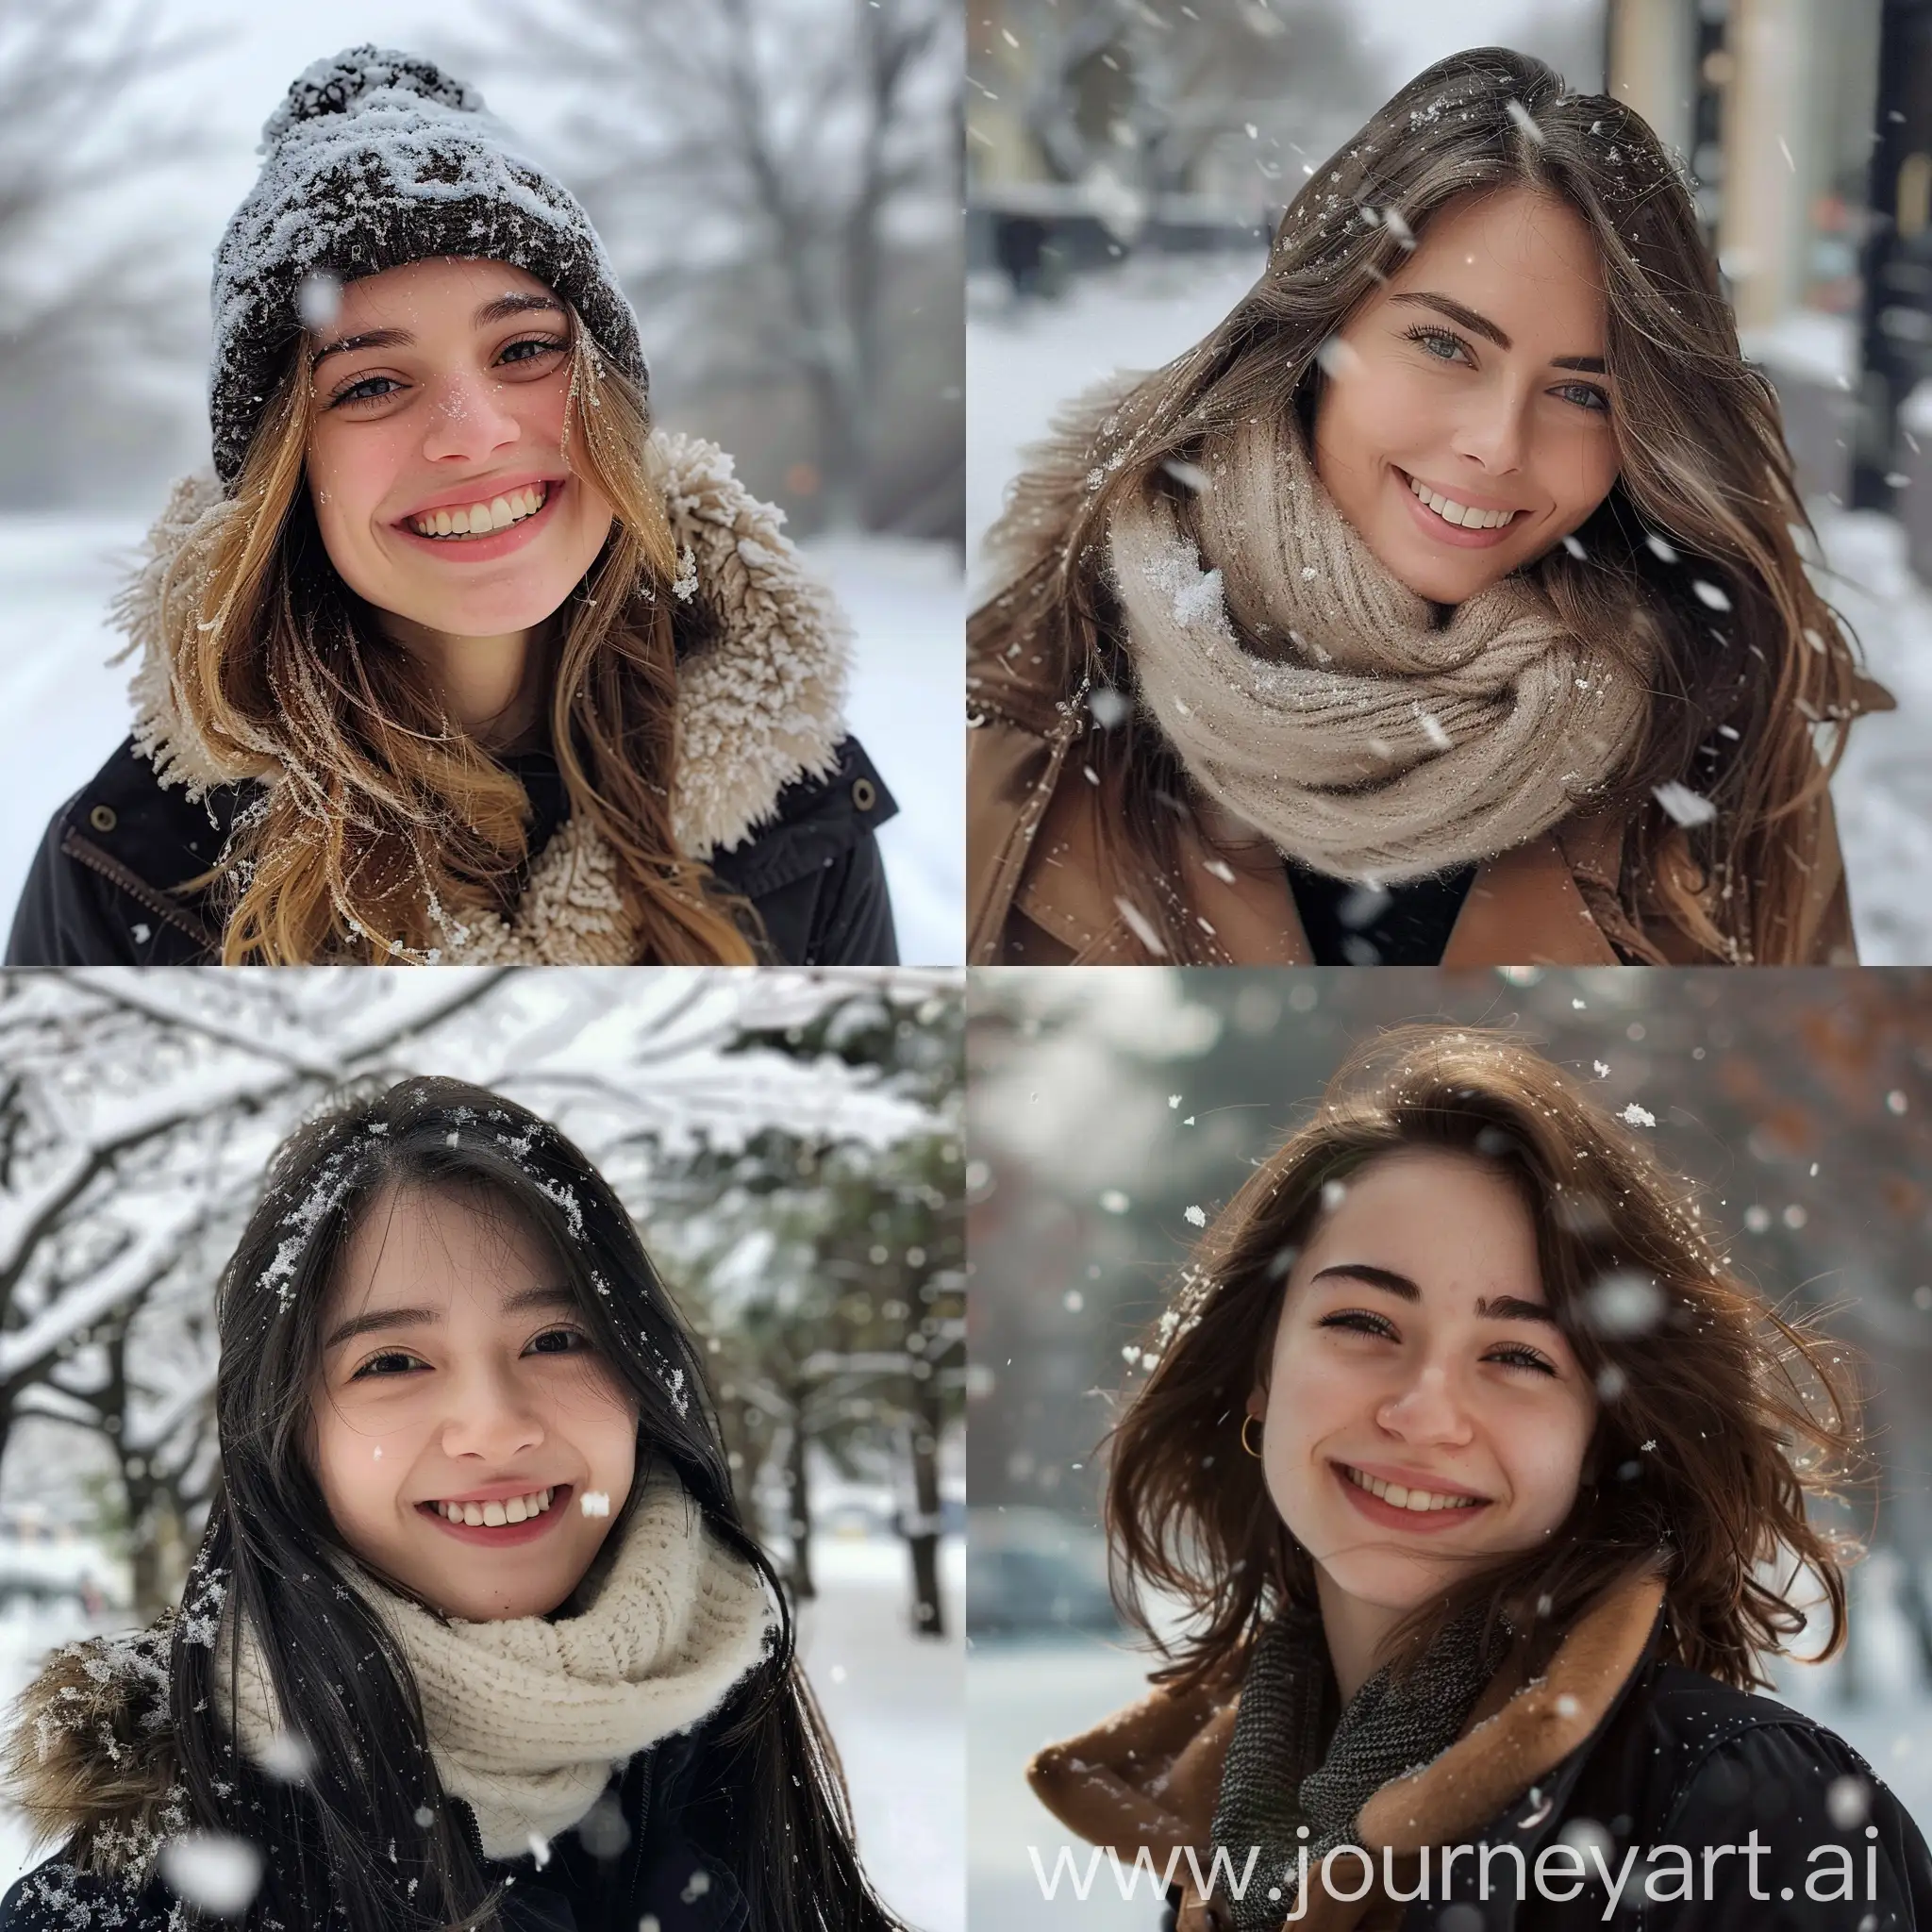 Smiling-Beauty-in-Snowy-Weather-Portrait